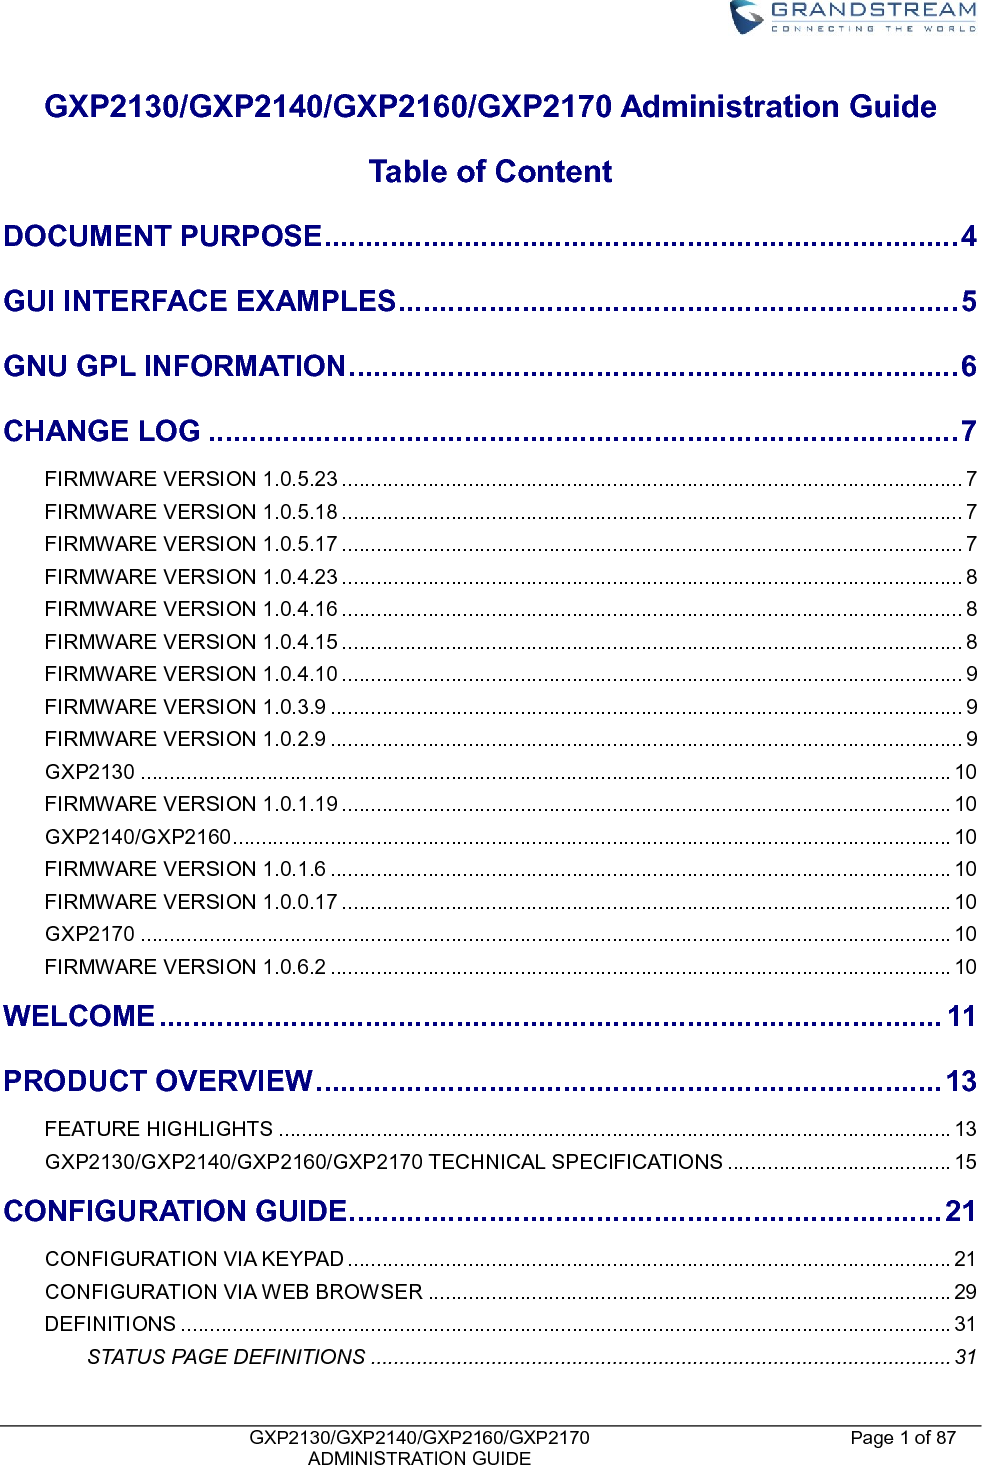    GXP2130/GXP2140/GXP2160/GXP2170   ADMINISTRATION GUIDE Page 1 of 87     GXP2130/GXP2140/GXP2160/GXP2170 Administration Guide     Table of Content DOCUMENT PURPOSE ............................................................................. 4 GUI INTERFACE EXAMPLES .................................................................... 5 GNU GPL INFORMATION .......................................................................... 6 CHANGE LOG ........................................................................................... 7 FIRMWARE VERSION 1.0.5.23 ............................................................................................................ 7 FIRMWARE VERSION 1.0.5.18 ............................................................................................................ 7 FIRMWARE VERSION 1.0.5.17 ............................................................................................................ 7 FIRMWARE VERSION 1.0.4.23 ............................................................................................................ 8 FIRMWARE VERSION 1.0.4.16 ............................................................................................................ 8 FIRMWARE VERSION 1.0.4.15 ............................................................................................................ 8 FIRMWARE VERSION 1.0.4.10 ............................................................................................................ 9 FIRMWARE VERSION 1.0.3.9 .............................................................................................................. 9 FIRMWARE VERSION 1.0.2.9 .............................................................................................................. 9 GXP2130 ............................................................................................................................................. 10 FIRMWARE VERSION 1.0.1.19 .......................................................................................................... 10 GXP2140/GXP2160 ............................................................................................................................. 10 FIRMWARE VERSION 1.0.1.6 ............................................................................................................ 10 FIRMWARE VERSION 1.0.0.17 .......................................................................................................... 10 GXP2170 ............................................................................................................................................. 10 FIRMWARE VERSION 1.0.6.2 ............................................................................................................ 10 WELCOME ............................................................................................... 11 PRODUCT OVERVIEW ............................................................................ 13 FEATURE HIGHLIGHTS ..................................................................................................................... 13 GXP2130/GXP2140/GXP2160/GXP2170 TECHNICAL SPECIFICATIONS ....................................... 15 CONFIGURATION GUIDE ........................................................................ 21 CONFIGURATION VIA KEYPAD ......................................................................................................... 21 CONFIGURATION VIA WEB BROWSER ........................................................................................... 29 DEFINITIONS ...................................................................................................................................... 31 STATUS PAGE DEFINITIONS ..................................................................................................... 31 